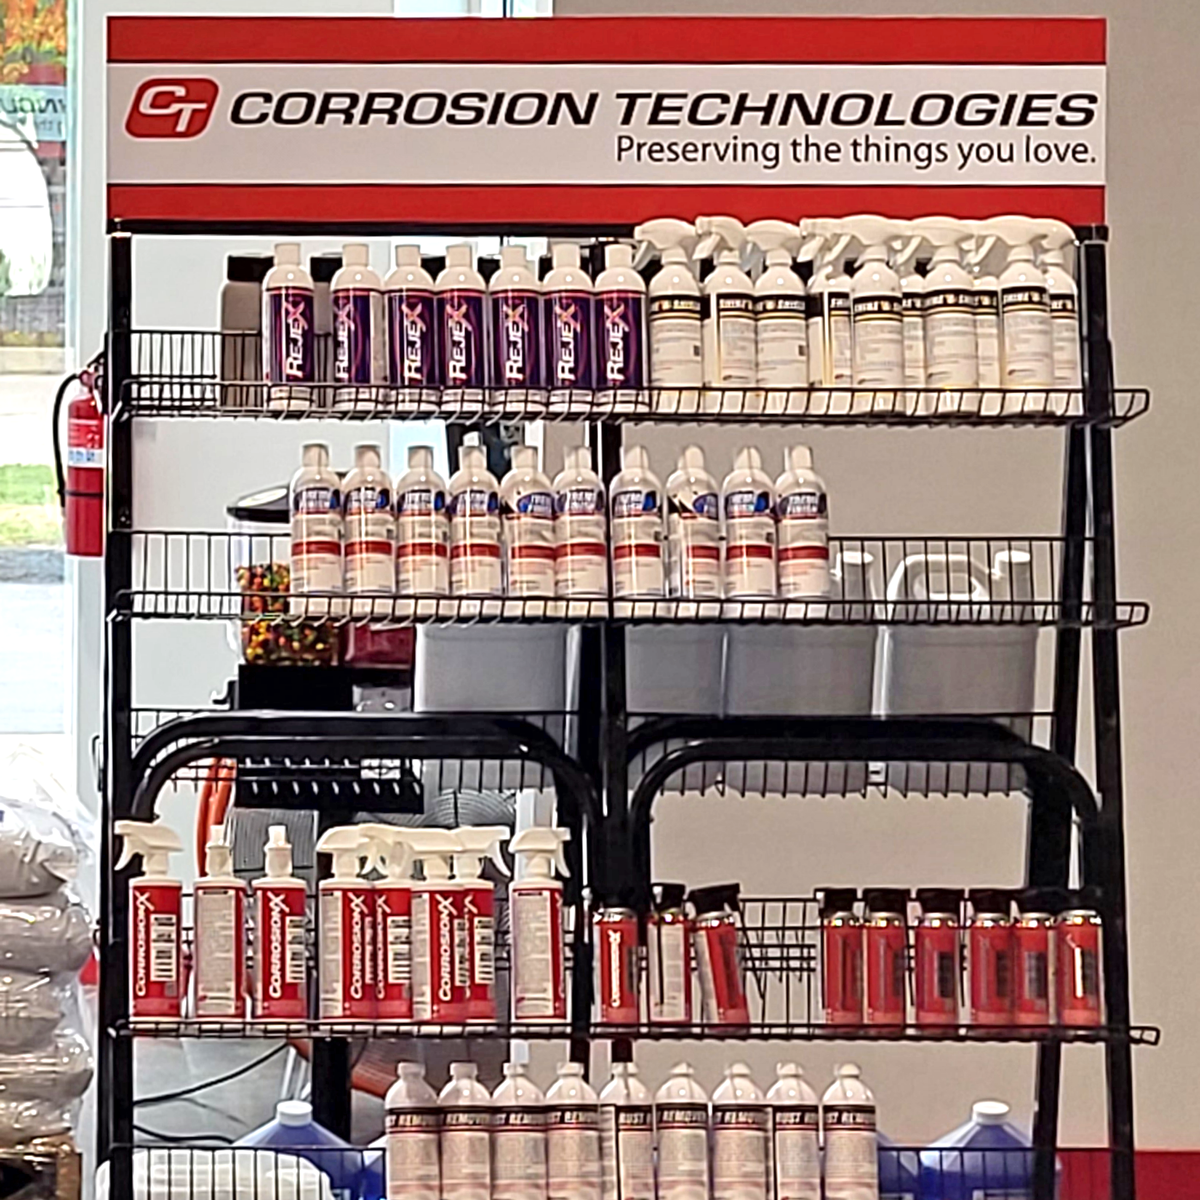 Corrosion Technologies retail shelf header card